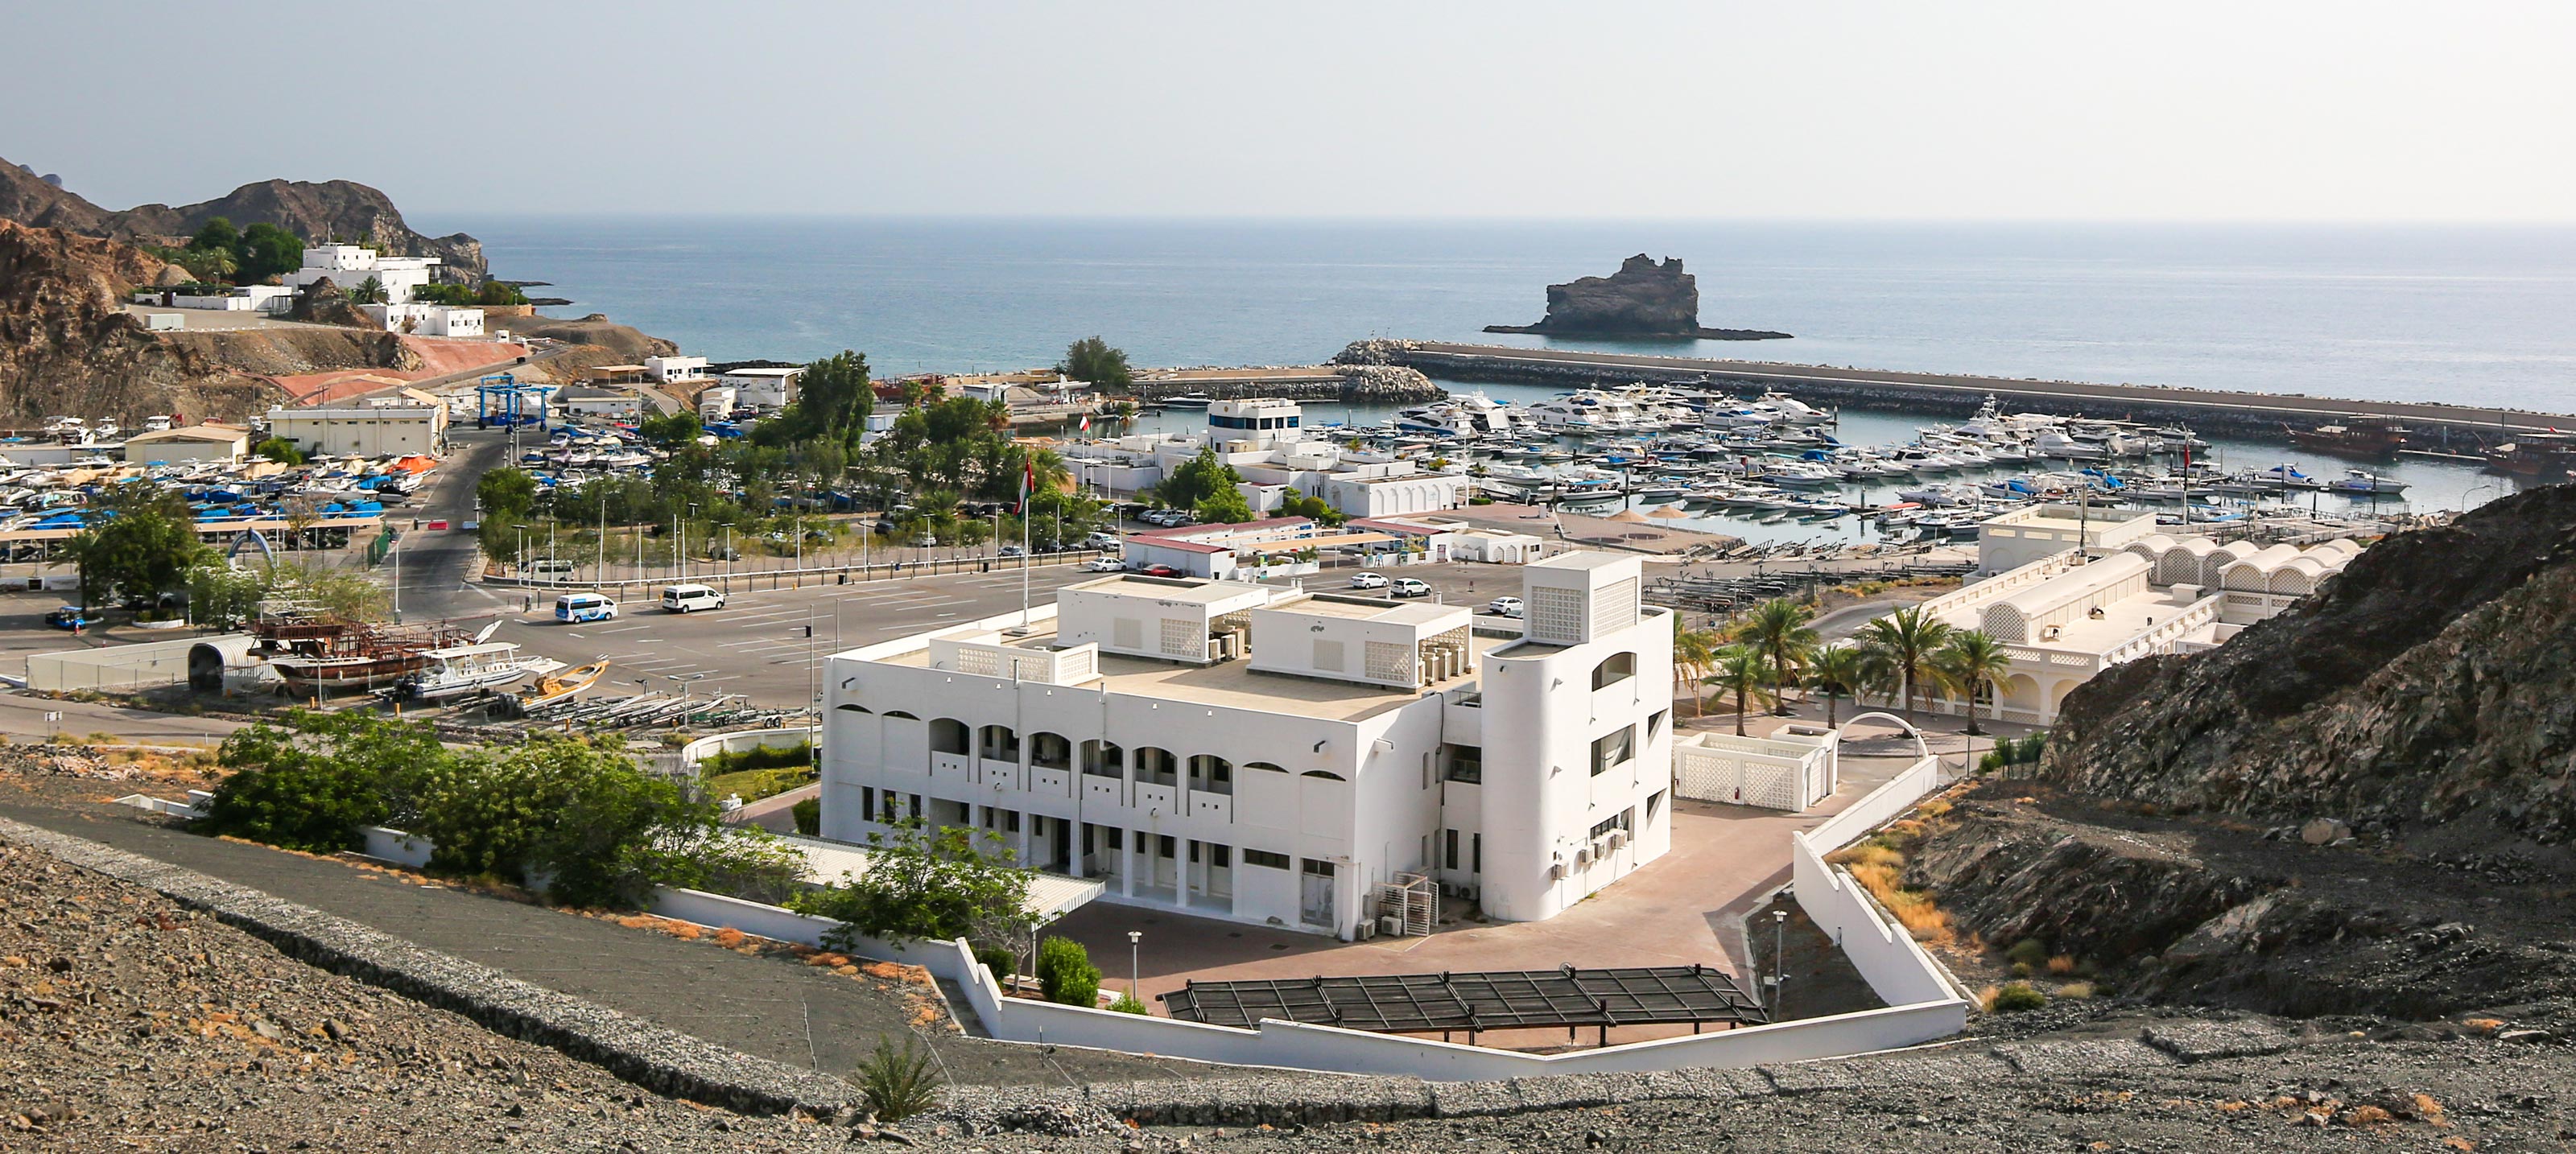 Angelreise nach Oman/Muscat Marina